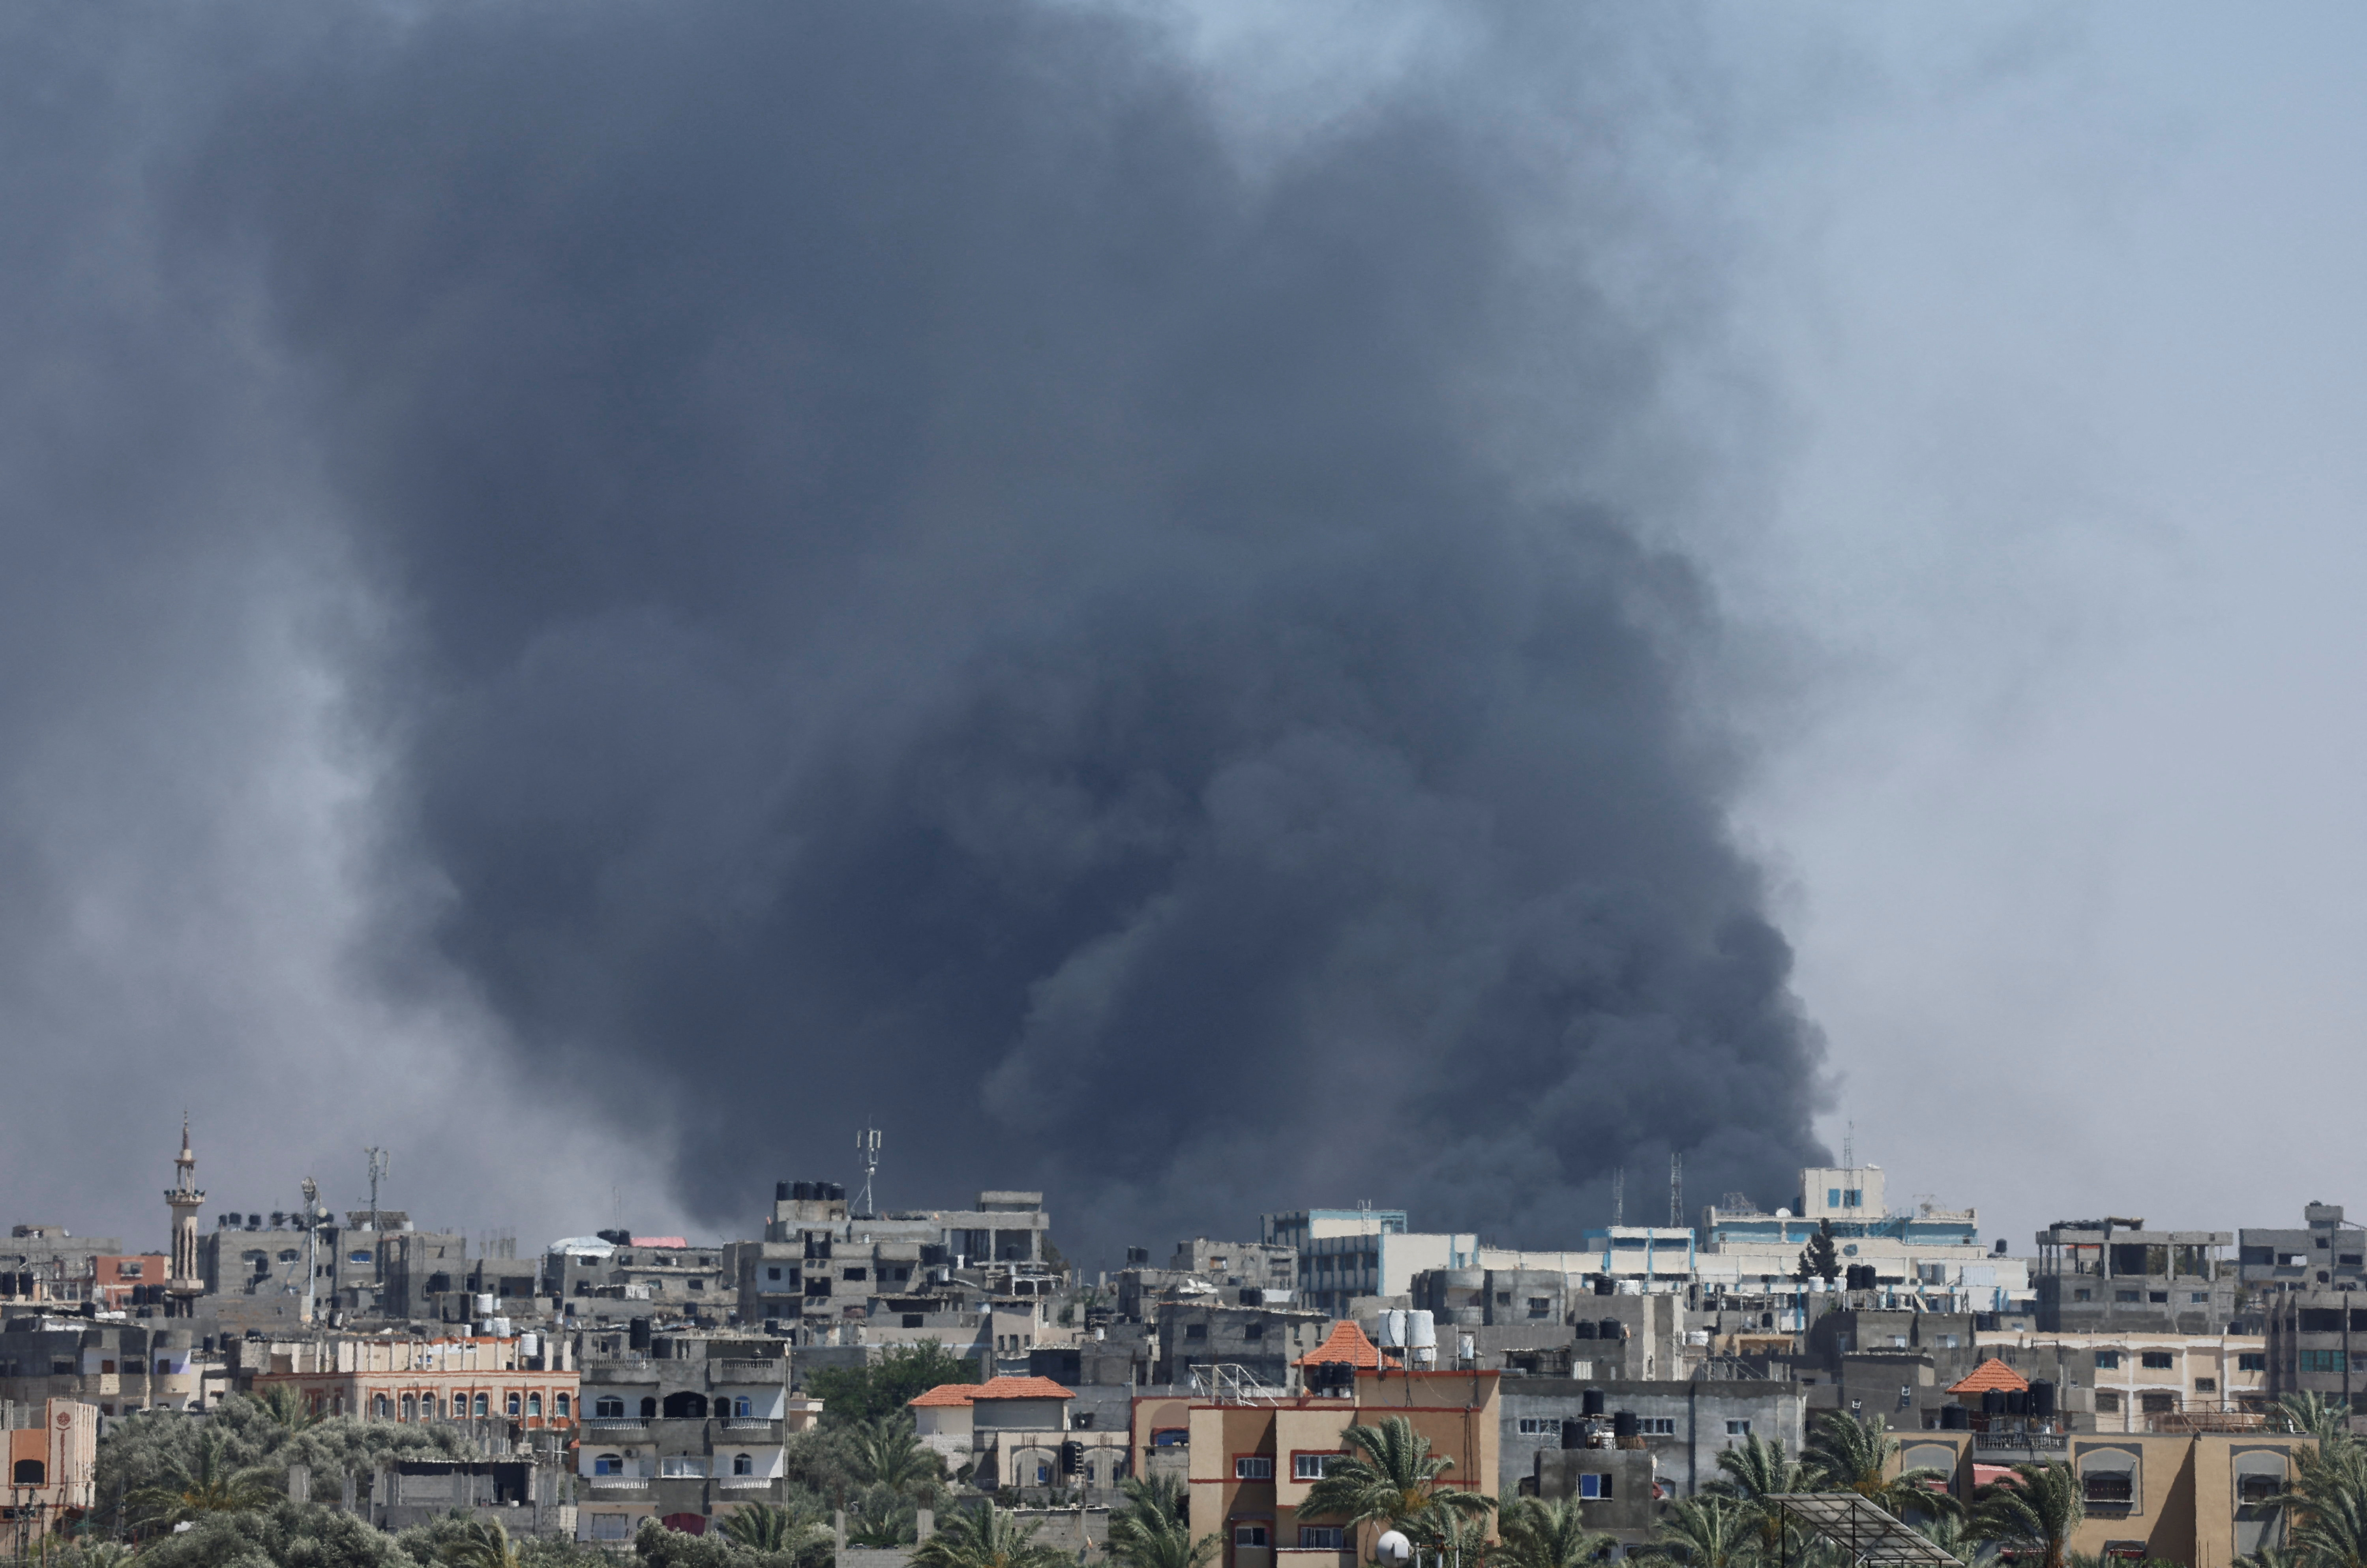 Smoke rises during an Israeli air strike, in Rafah